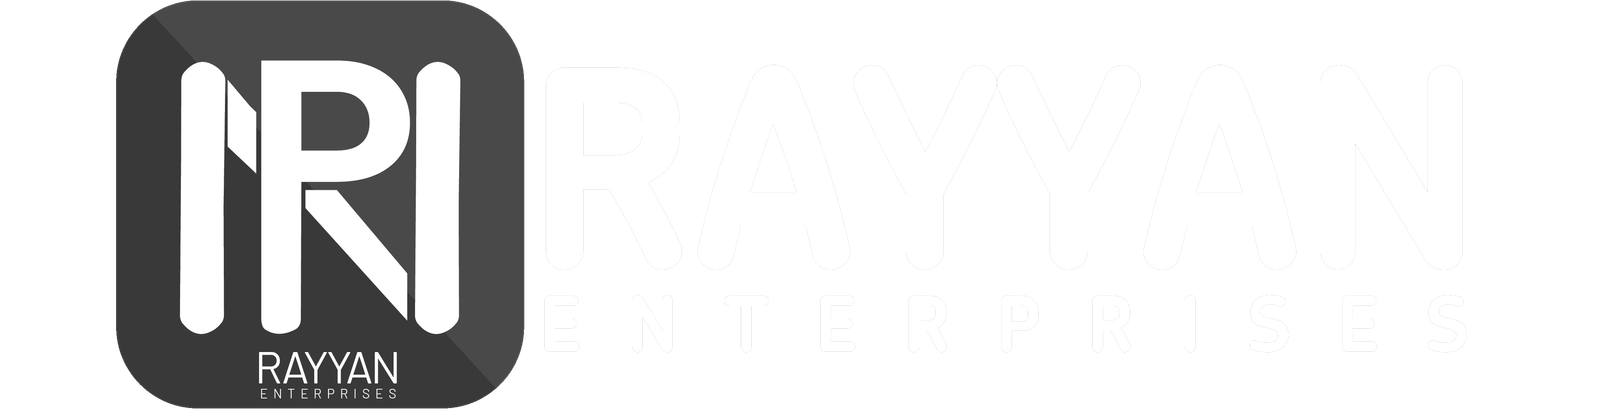 footer logo rayyan enterprises 1